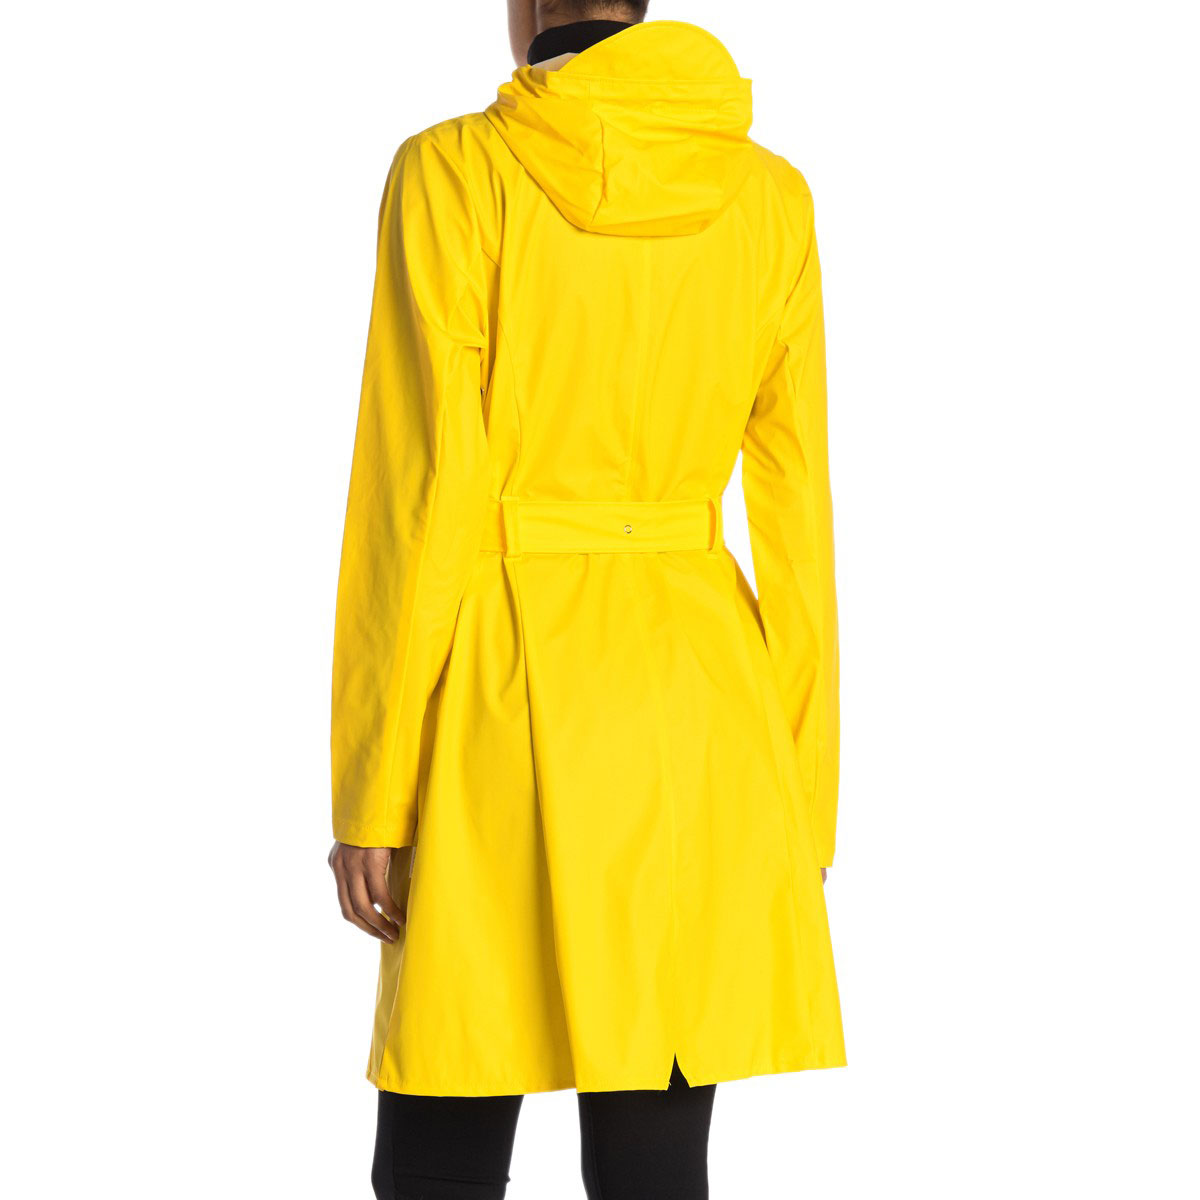 RAINS Women's Curve Rain Jacket, Yellow, X-Small/Small - image 2 of 2